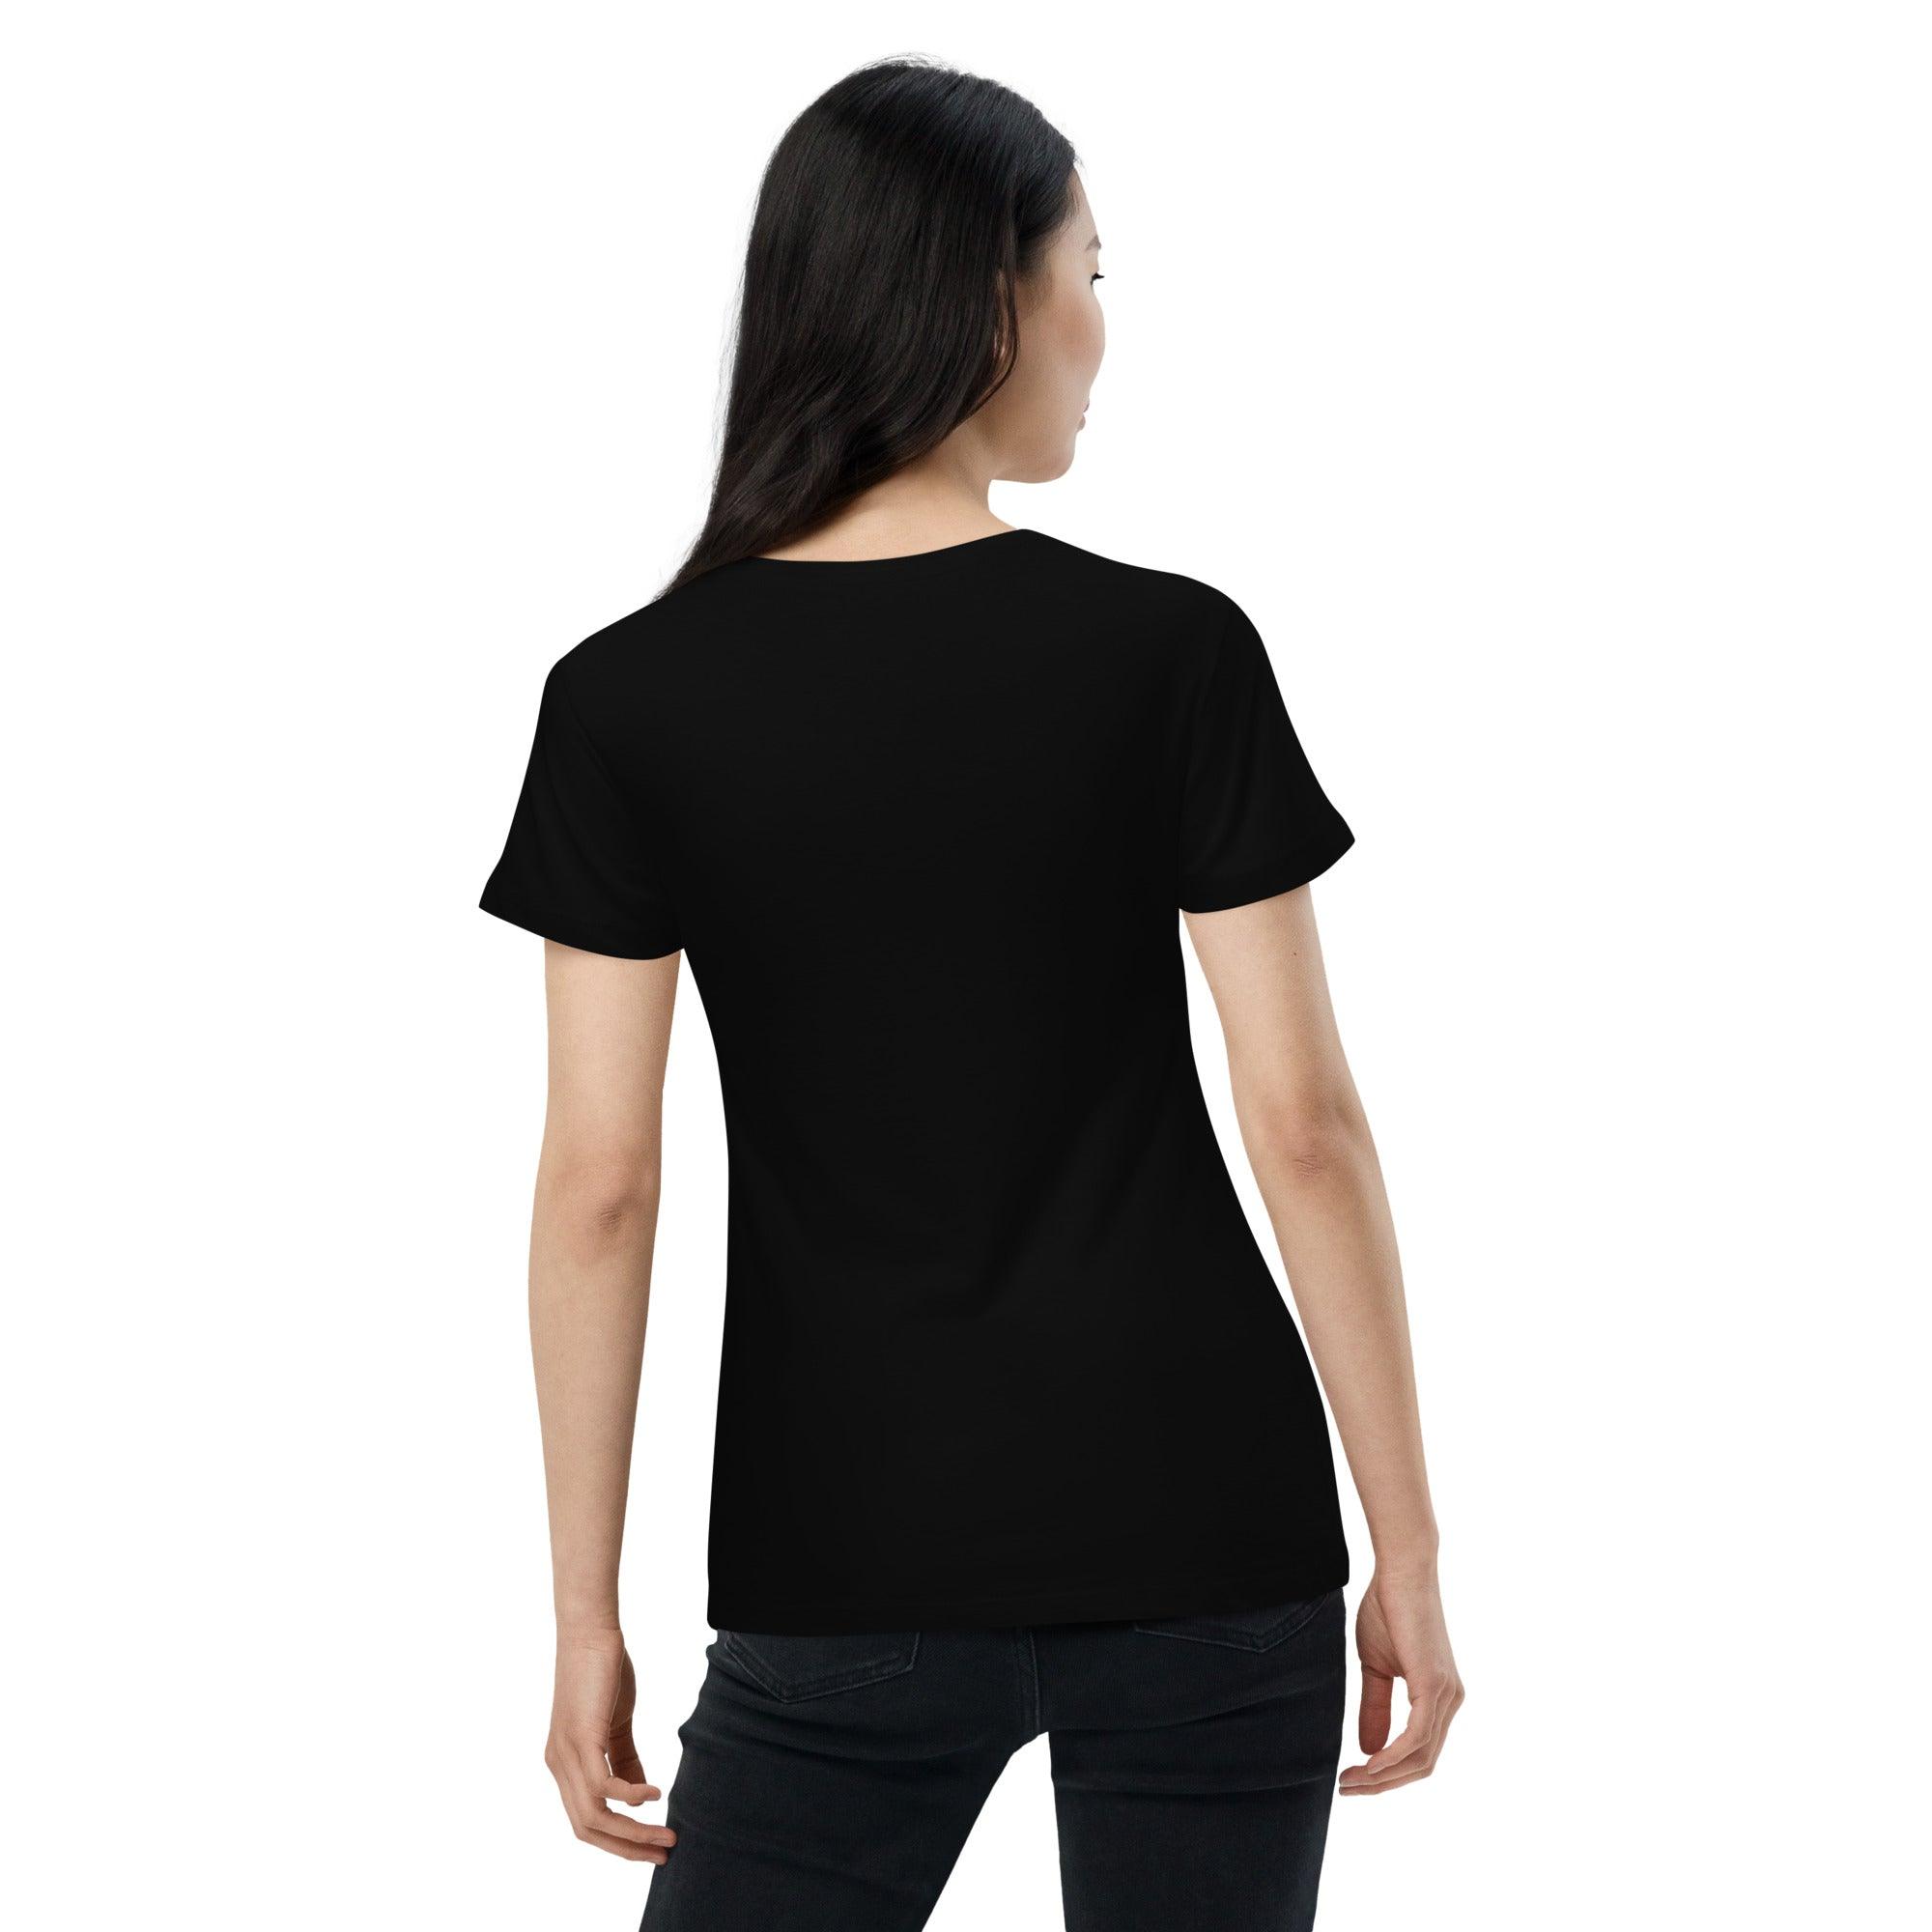 Sound of adrenaline women’s basic organic t-shirt - Beyond T-shirts